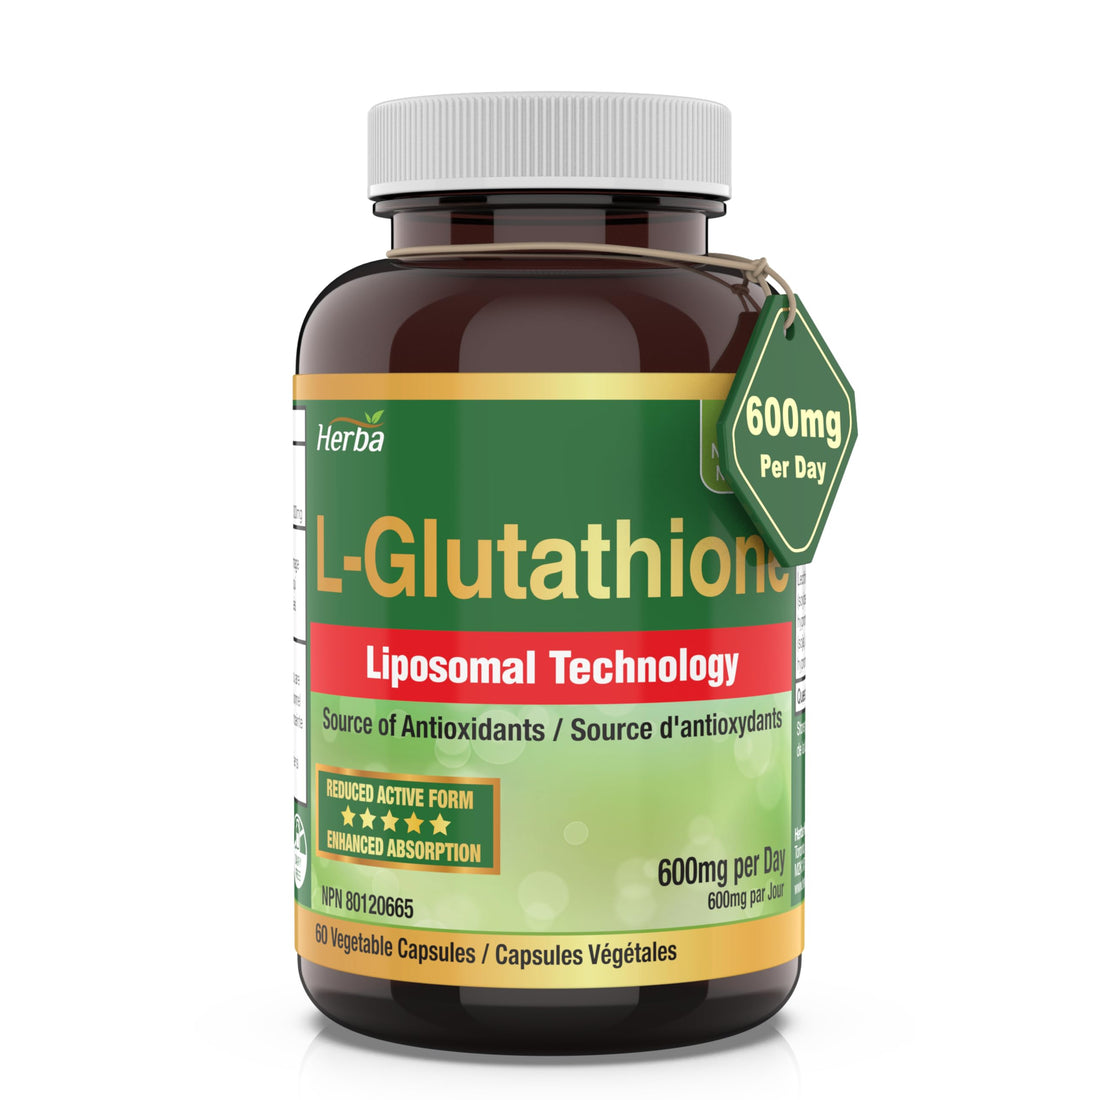 Herba Liposomal Glutathione Supplement - 600mg Per Day | 60 Vegetable Capsules